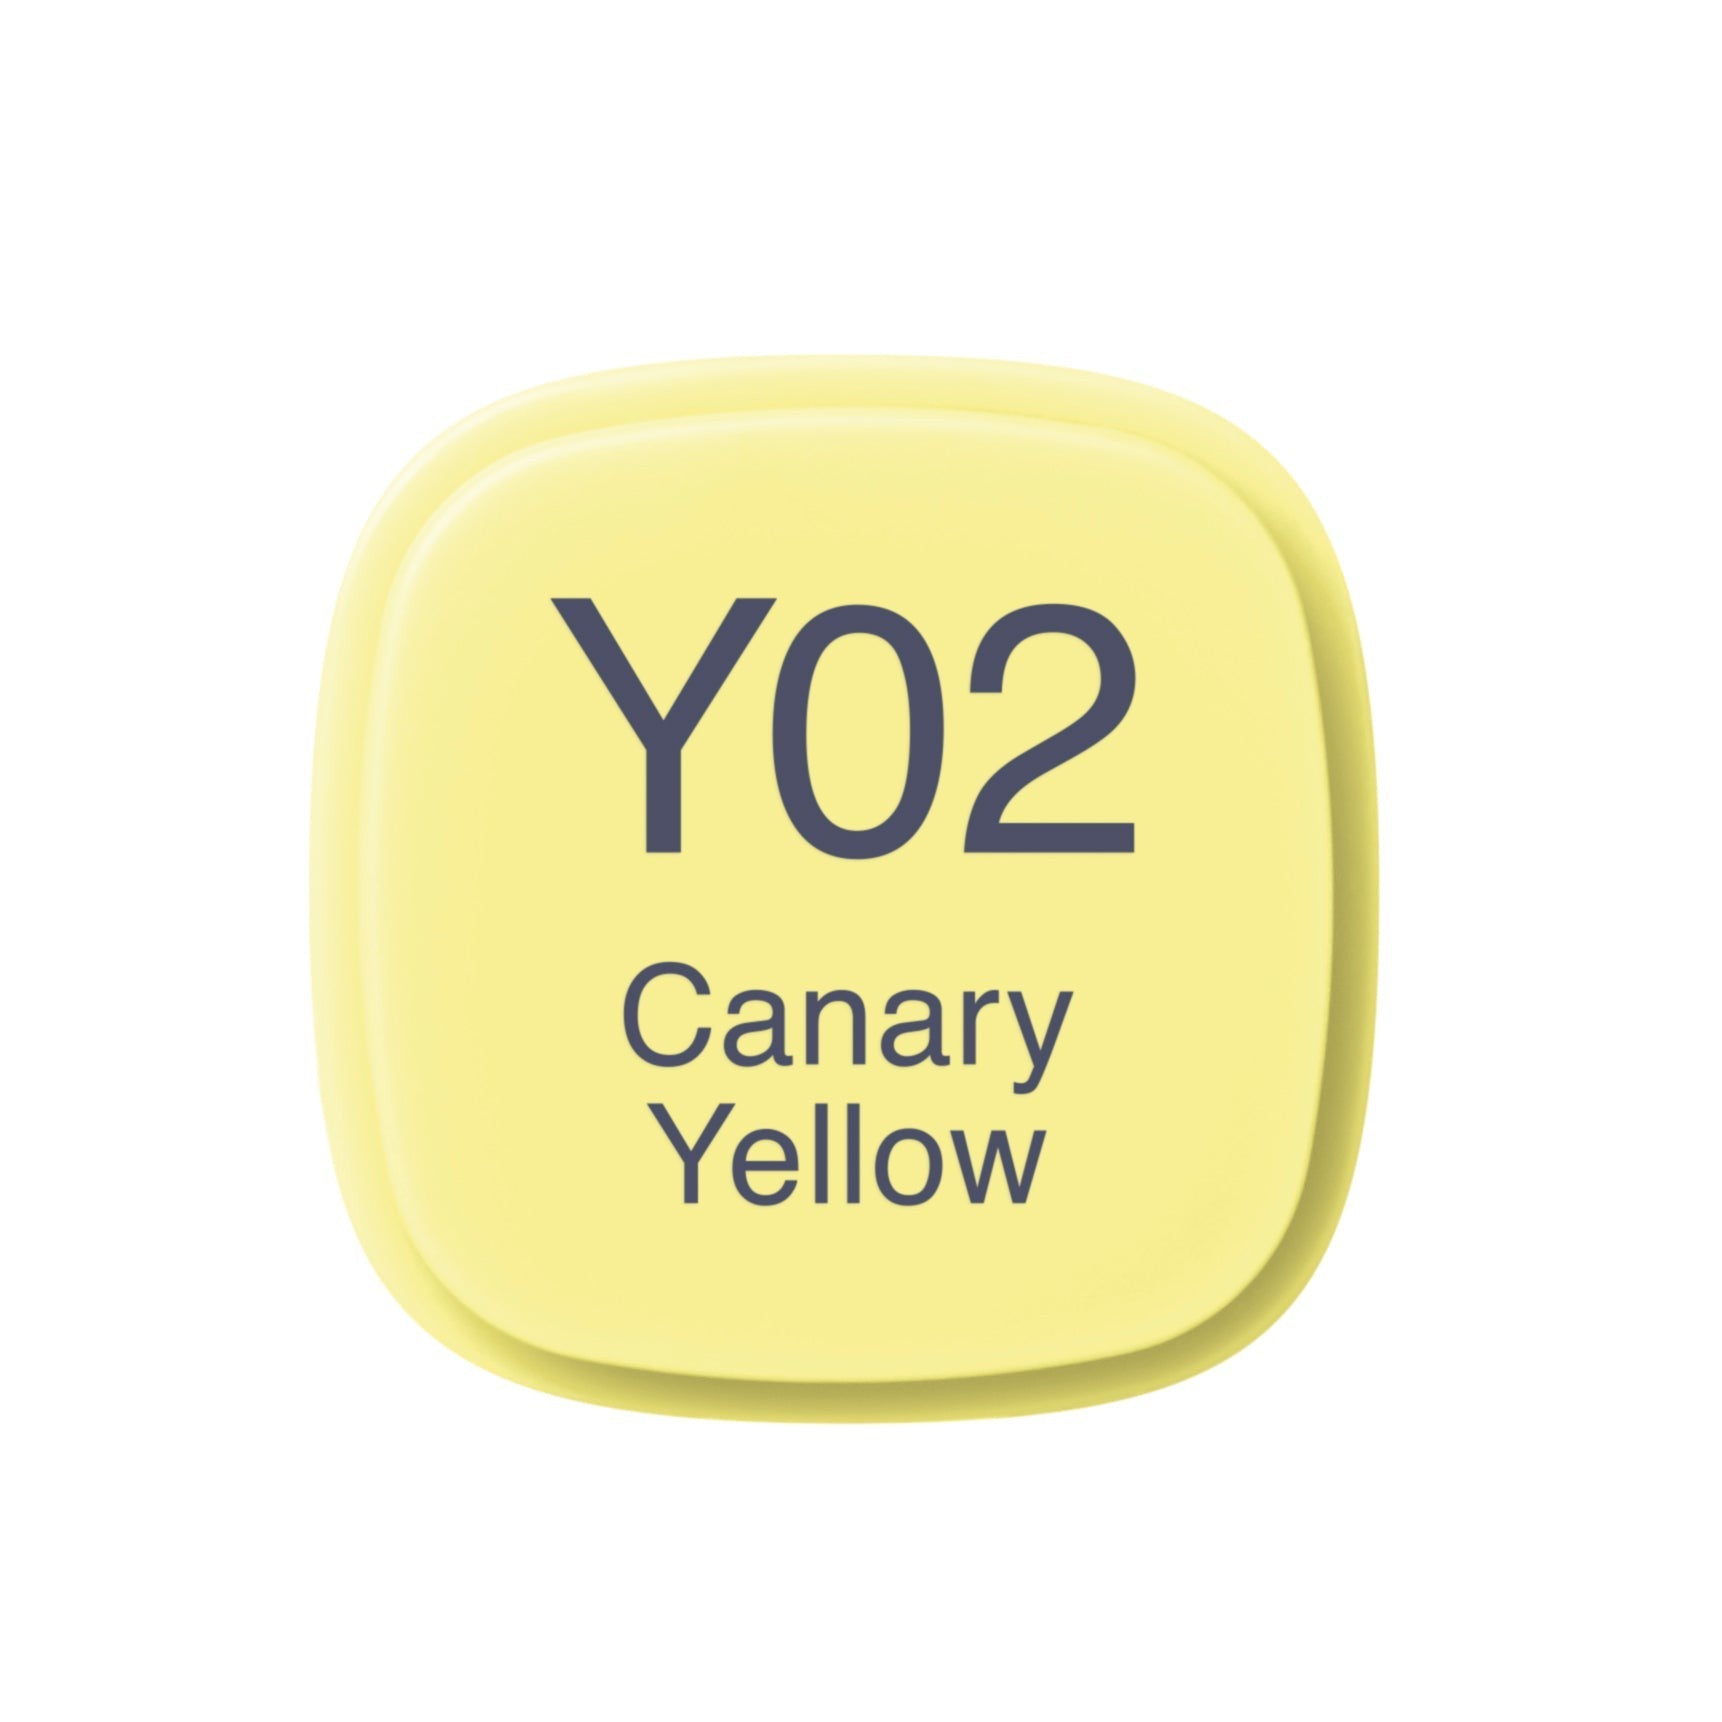 Copic - Original Marker - Canary Yellow - Y02-ScrapbookPal